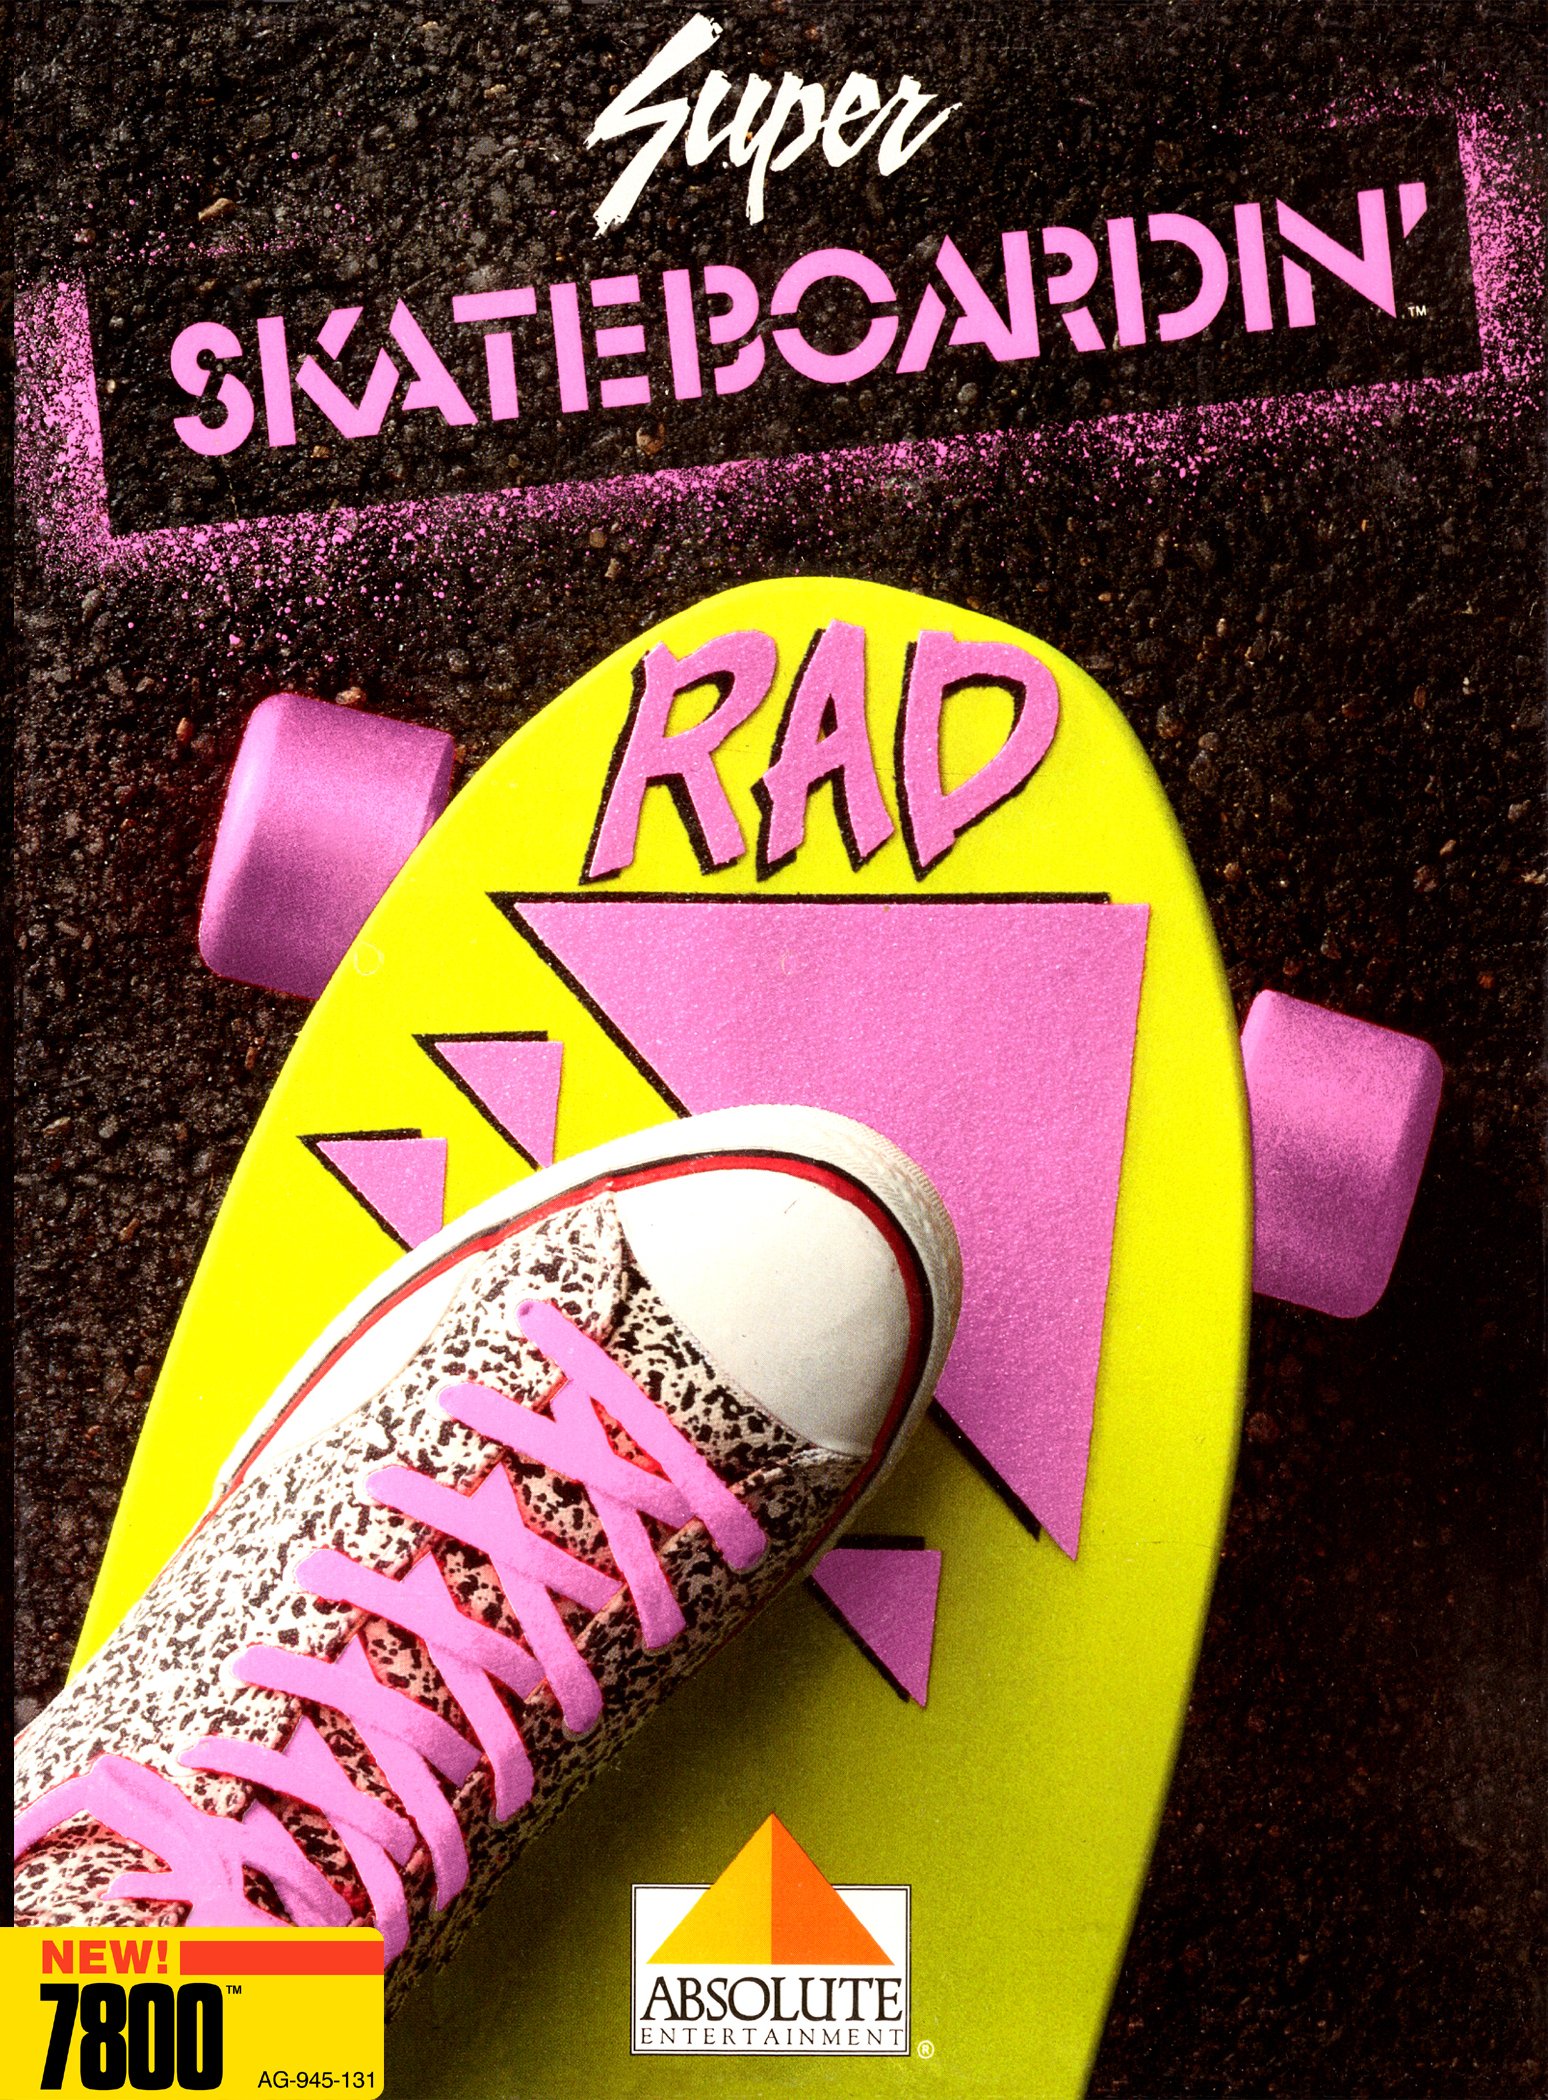 Image of Super Skateboardin'